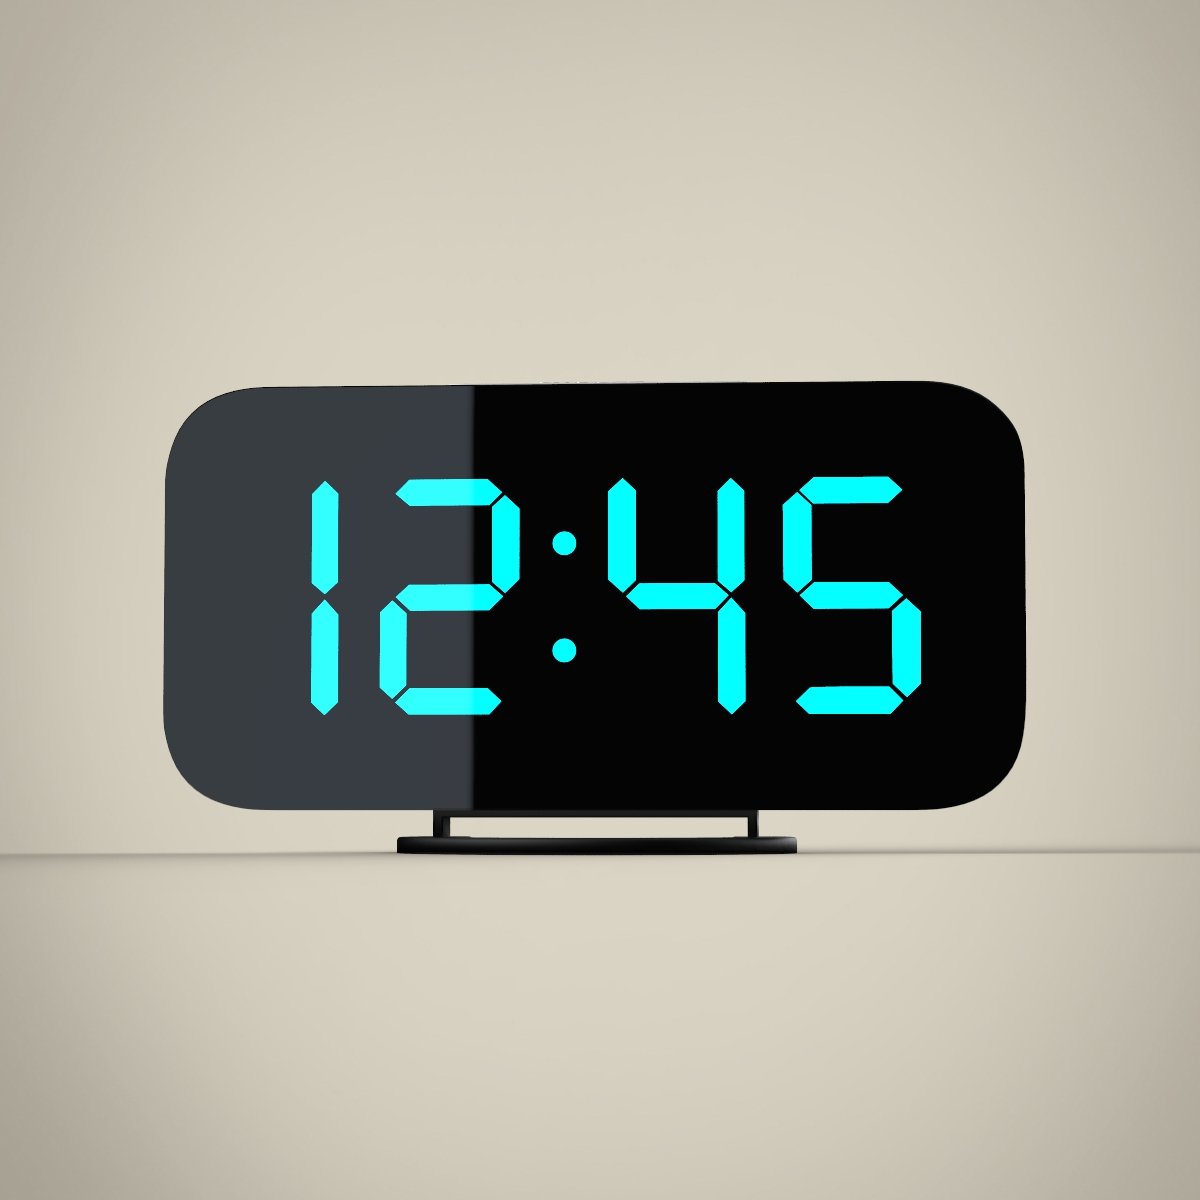 Digital clock, alarm Clock, timer, wall Clock, Alarm, home Accessories,  cartoon Alien, kitchen Utensil, share Icon, icon Design